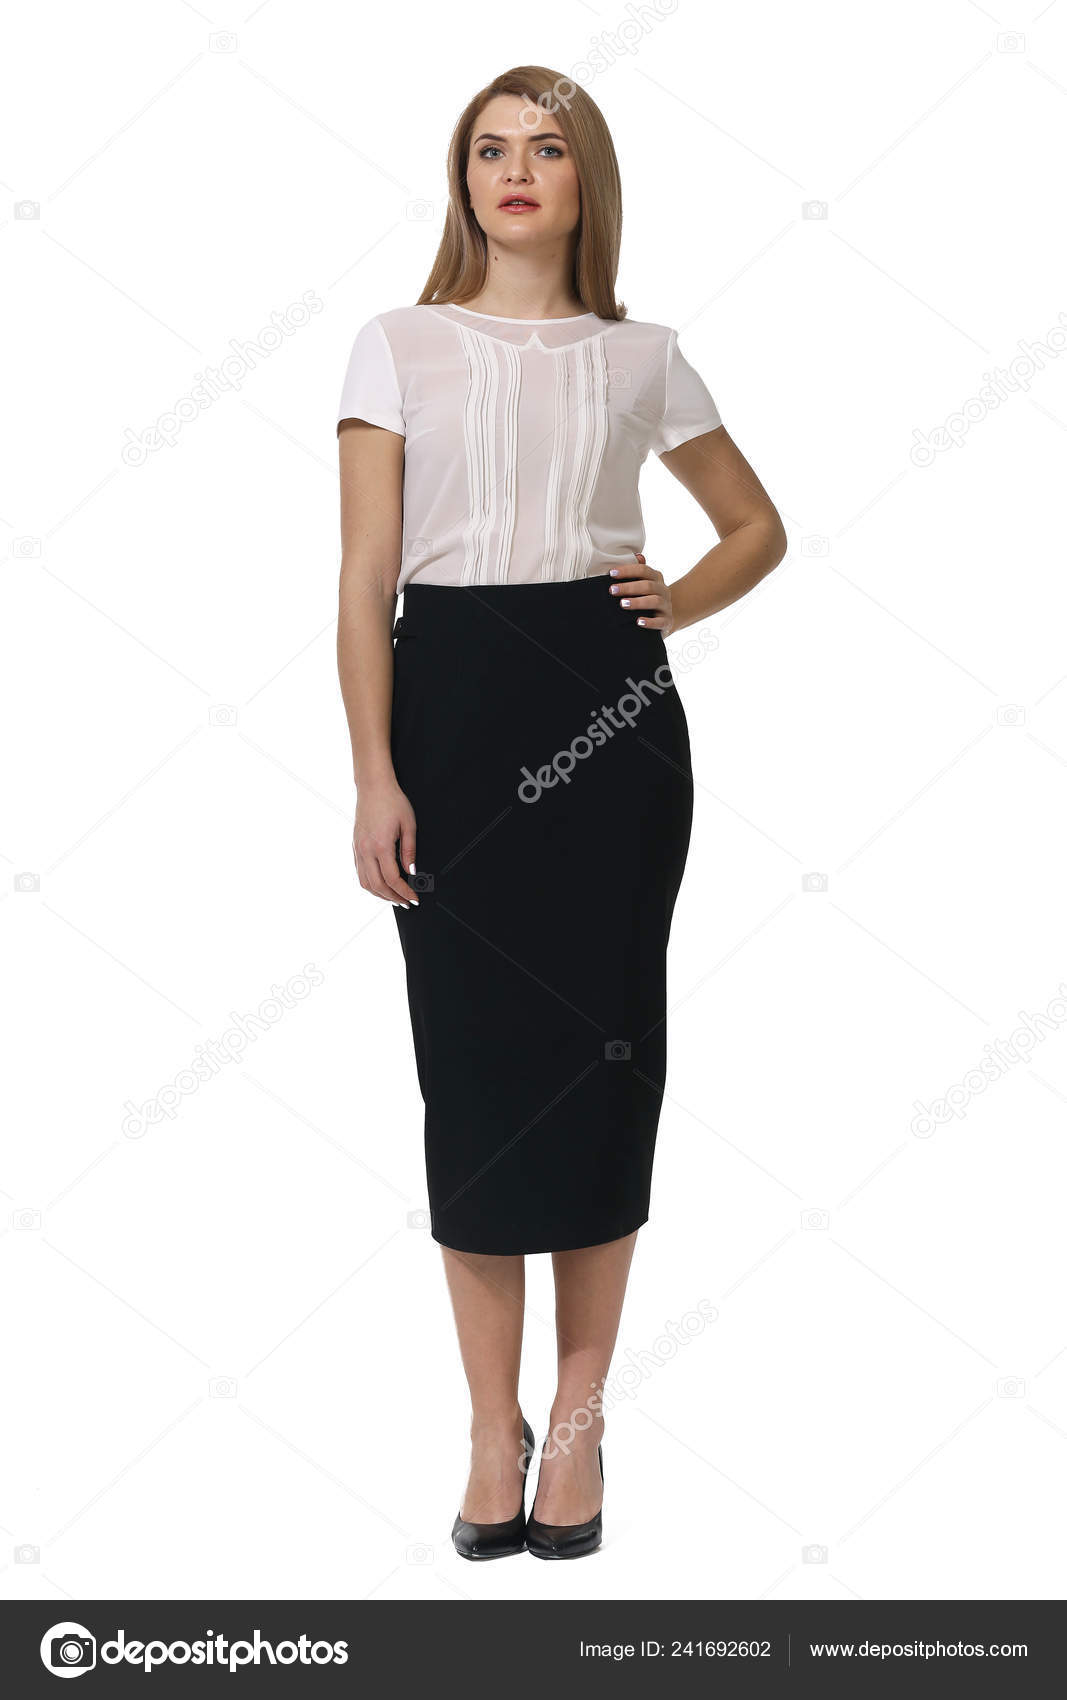 White Blouse And Short Black Skirt Buyudum Cocuk Oldum - skirts roblox id